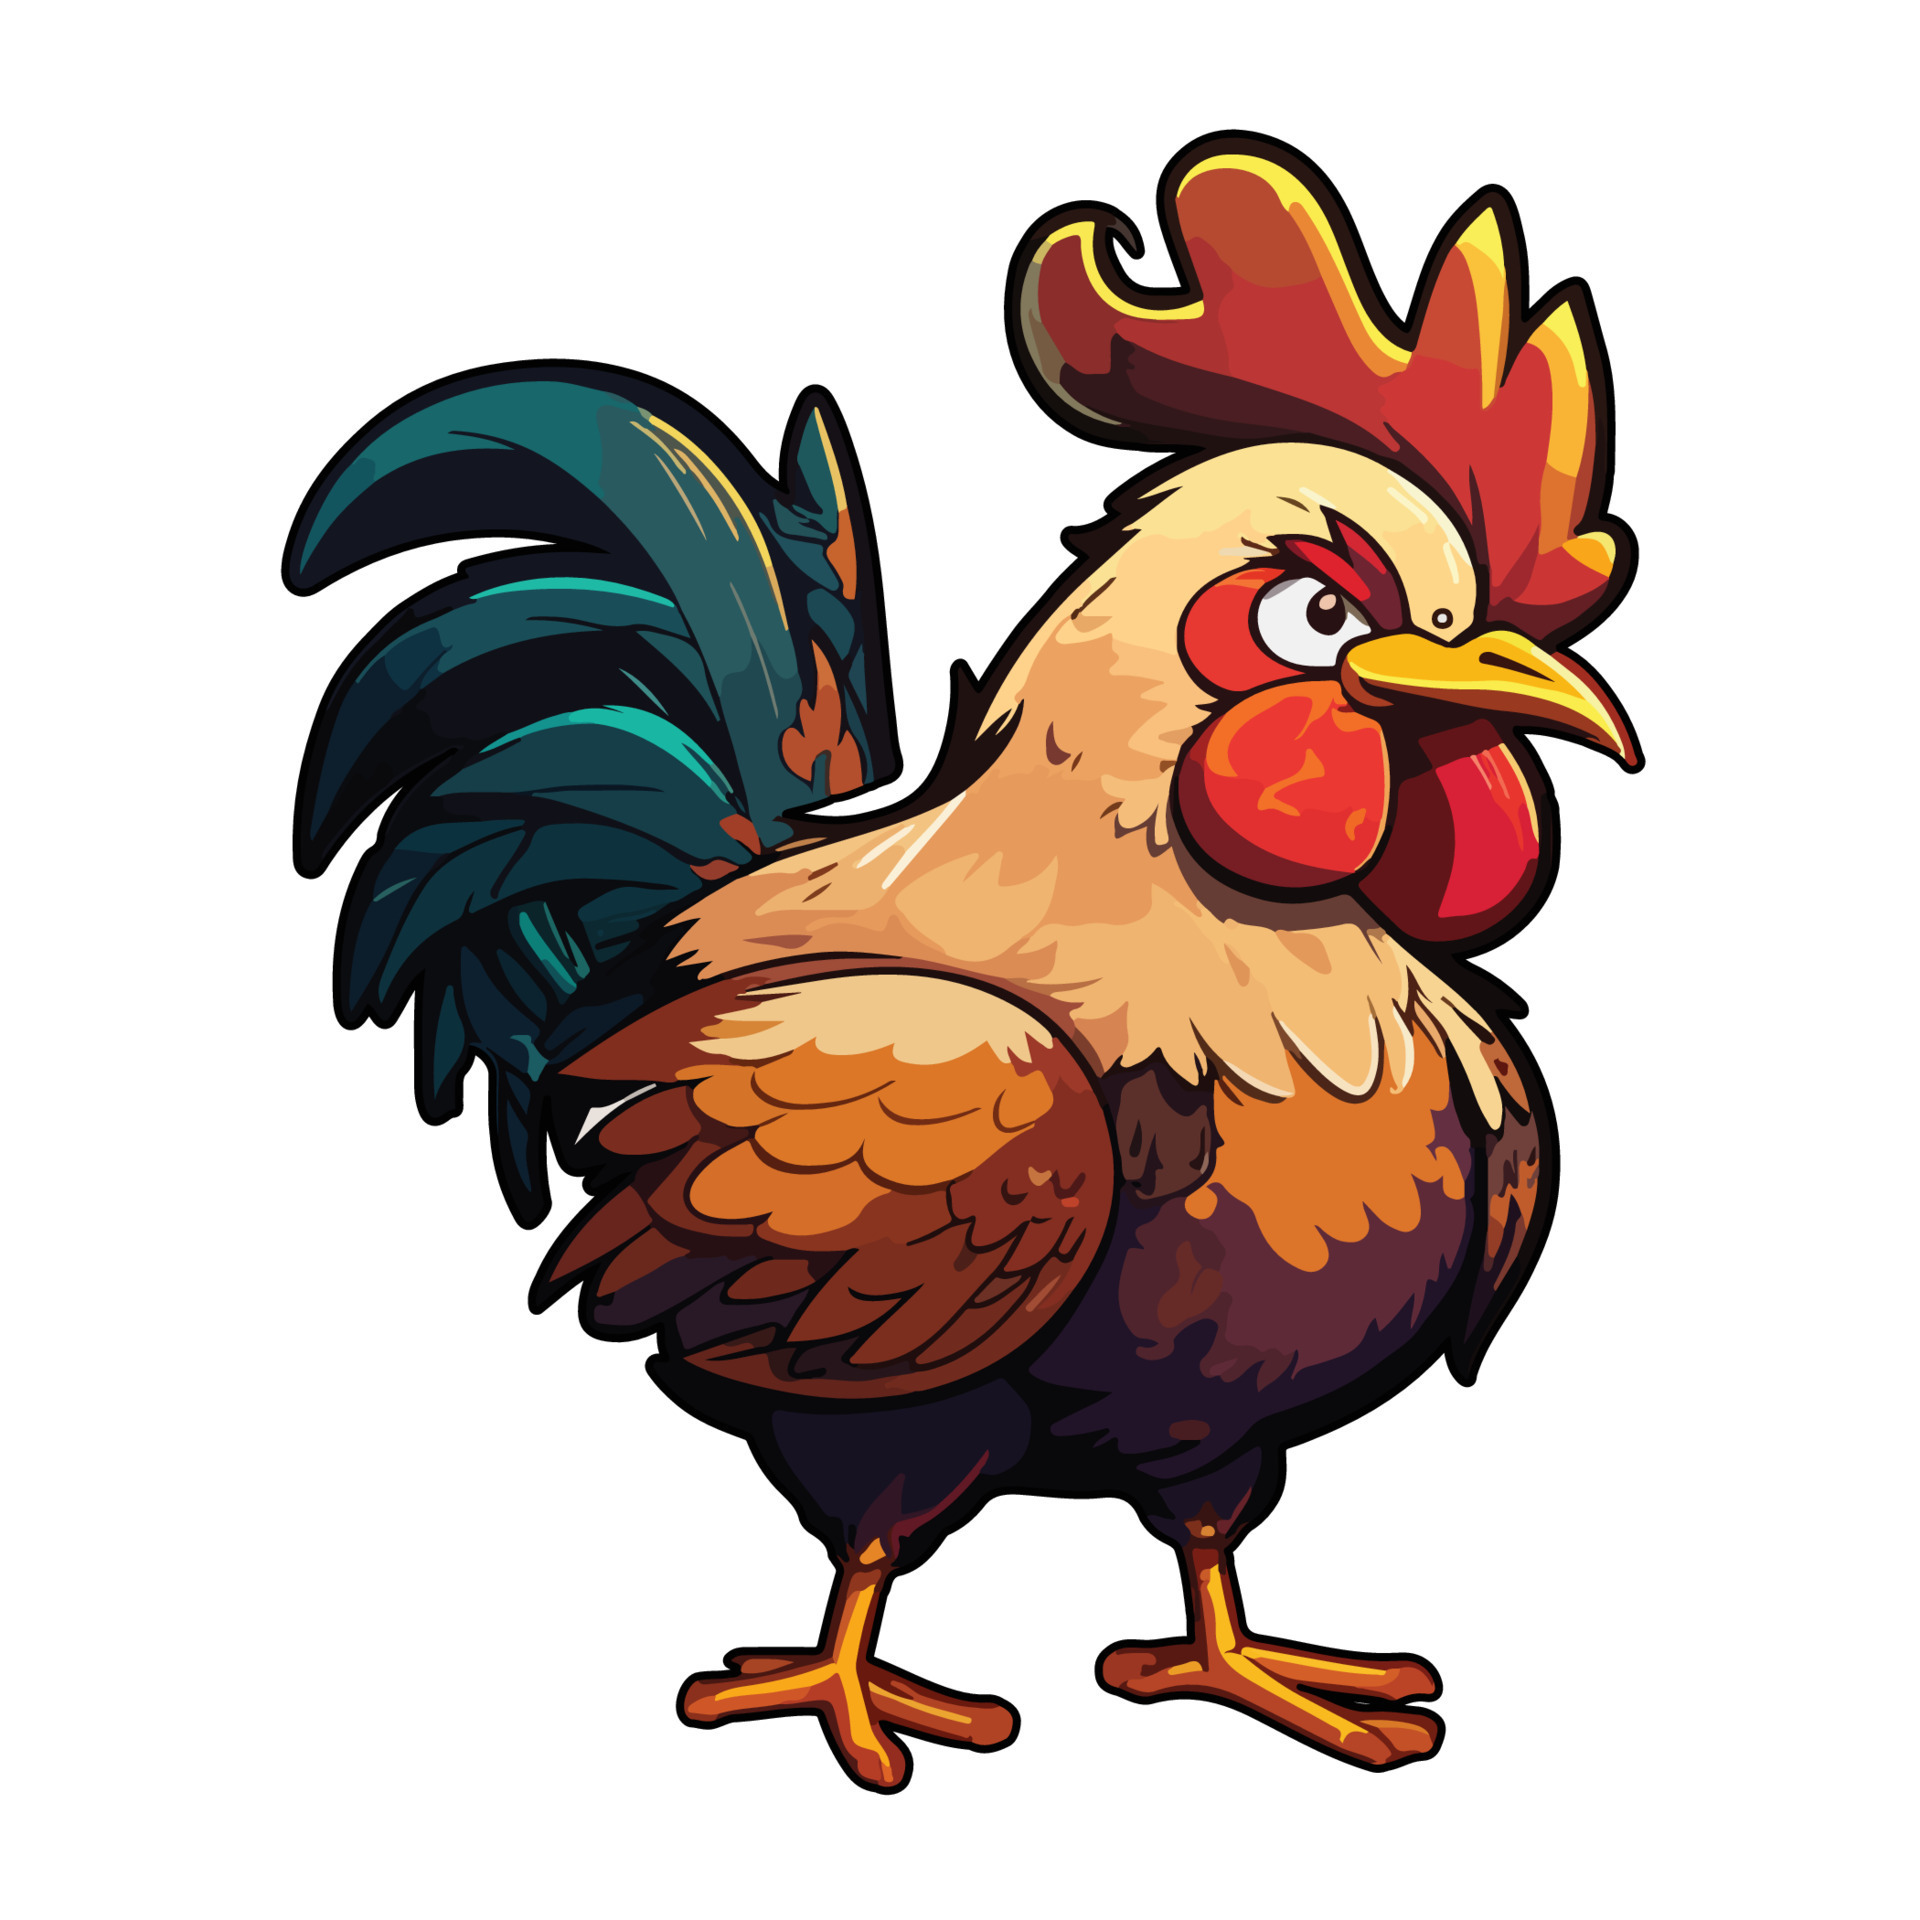 fofa galinha desenho animado estilo 21638258 Vetor no Vecteezy